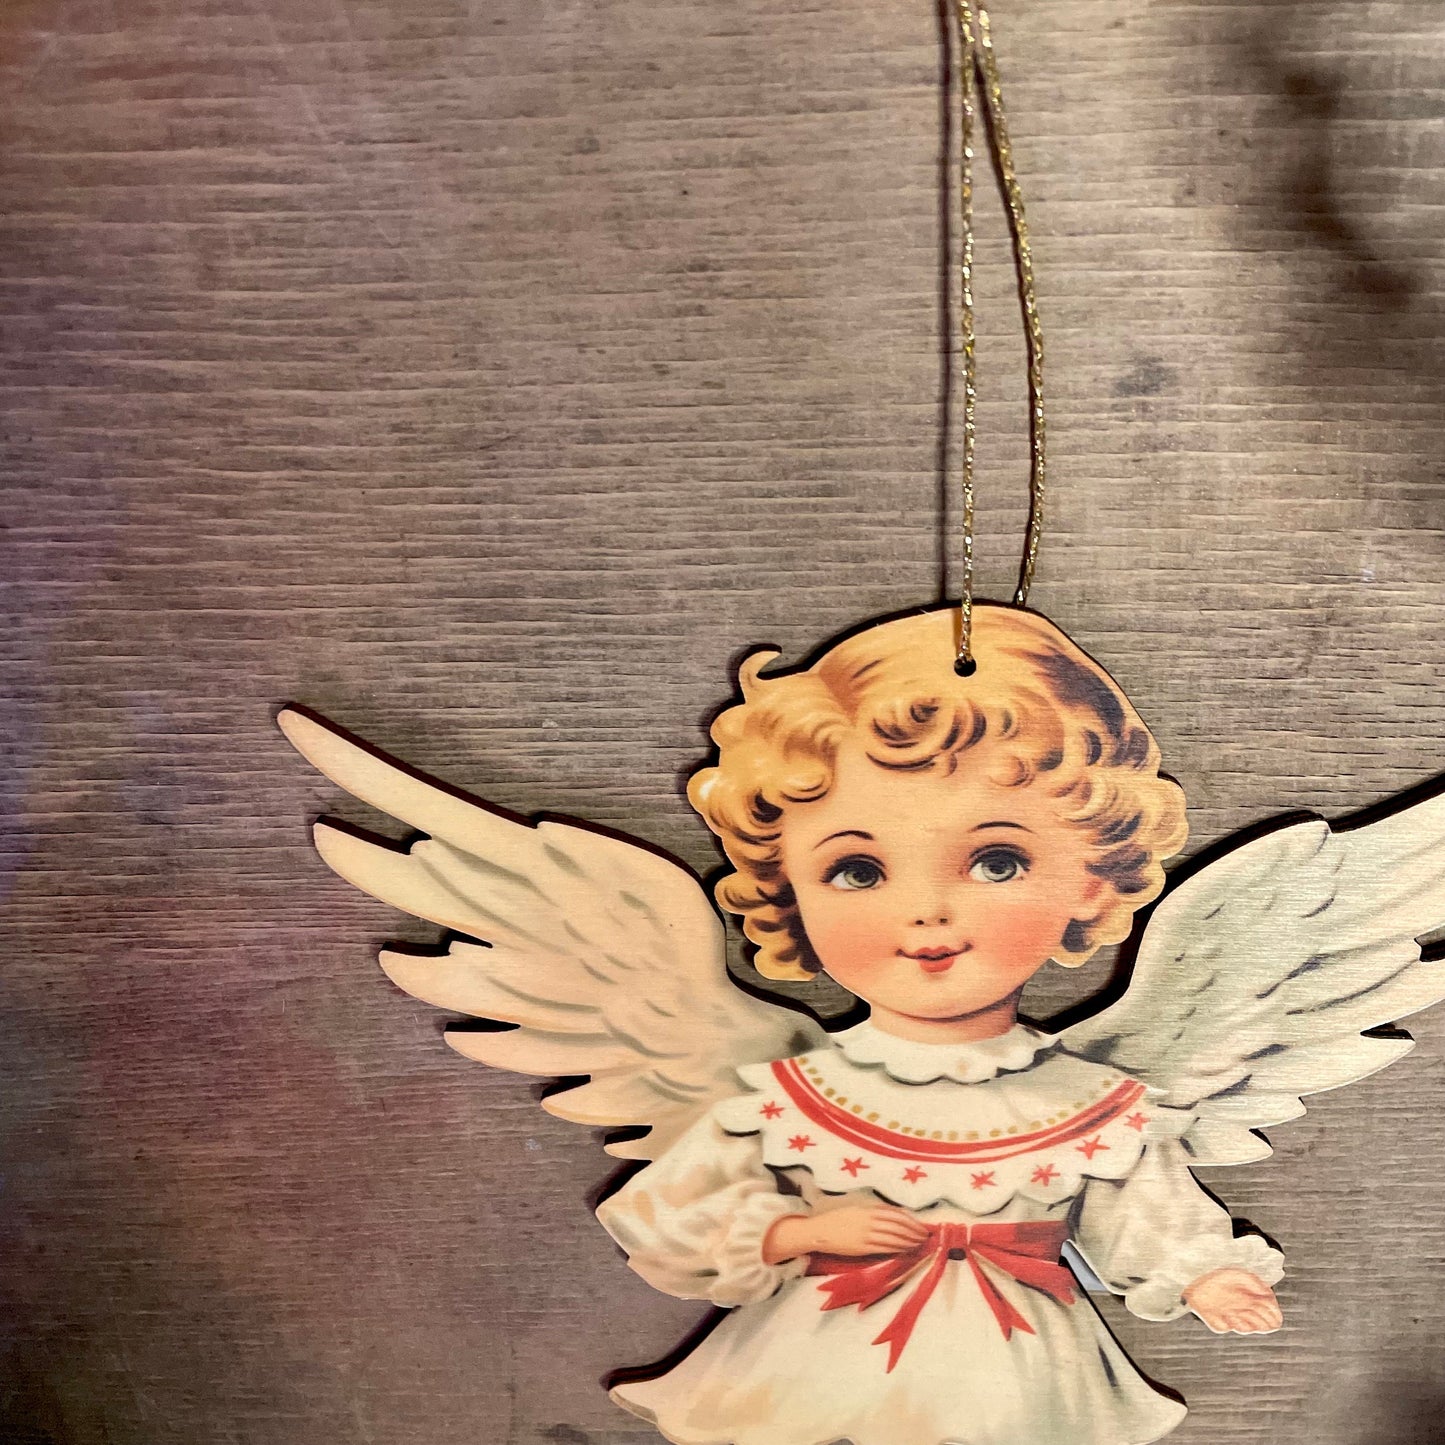 Vintage Angel Christmas Hanging Decoration, wall hanging kitsch festive decor wooden laser cut